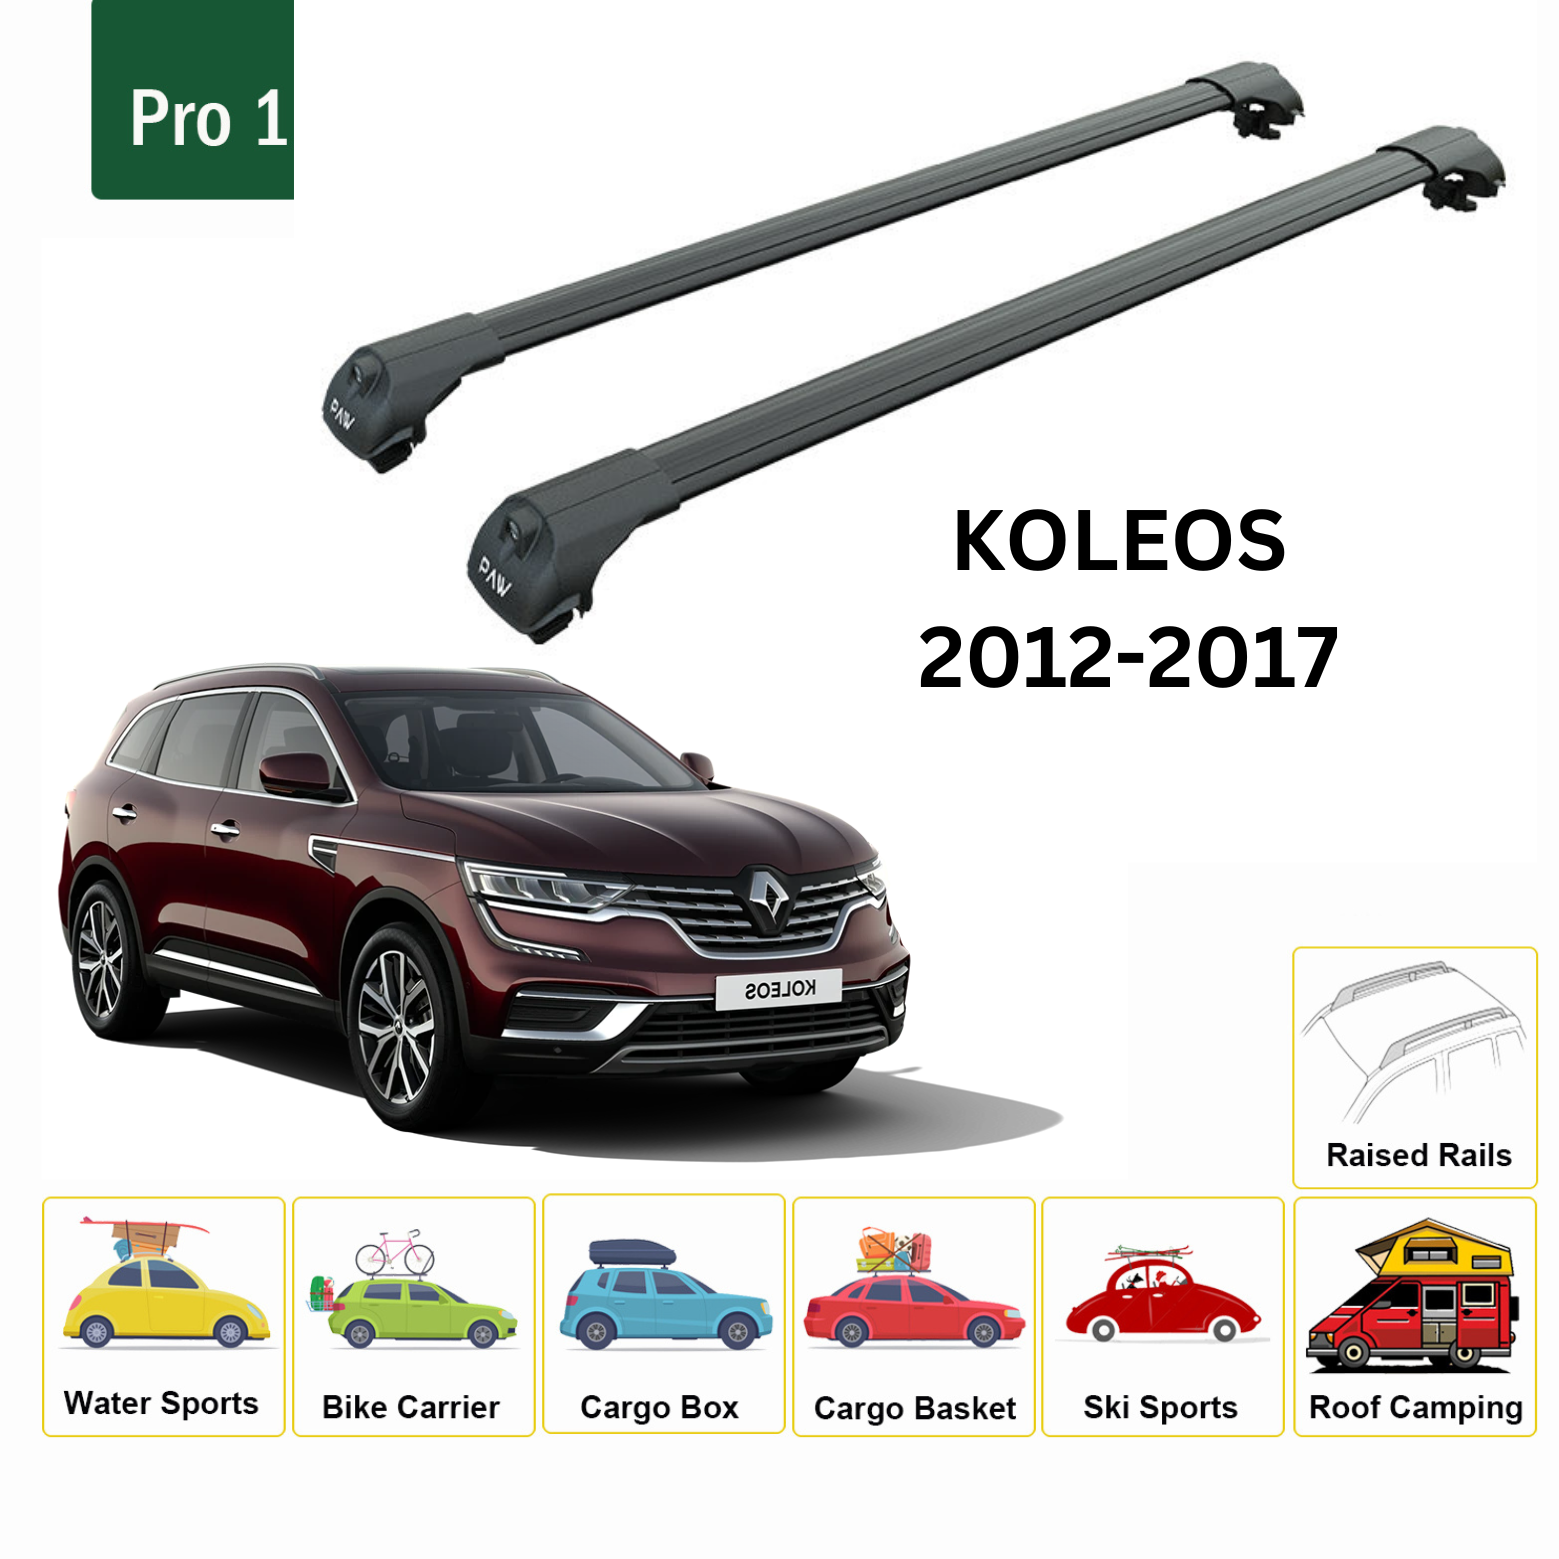 For Renault Koleos 2012-2017 Roof Rack System, Aluminium Cross Bar, Metal Bracket, Normal Roof, Black